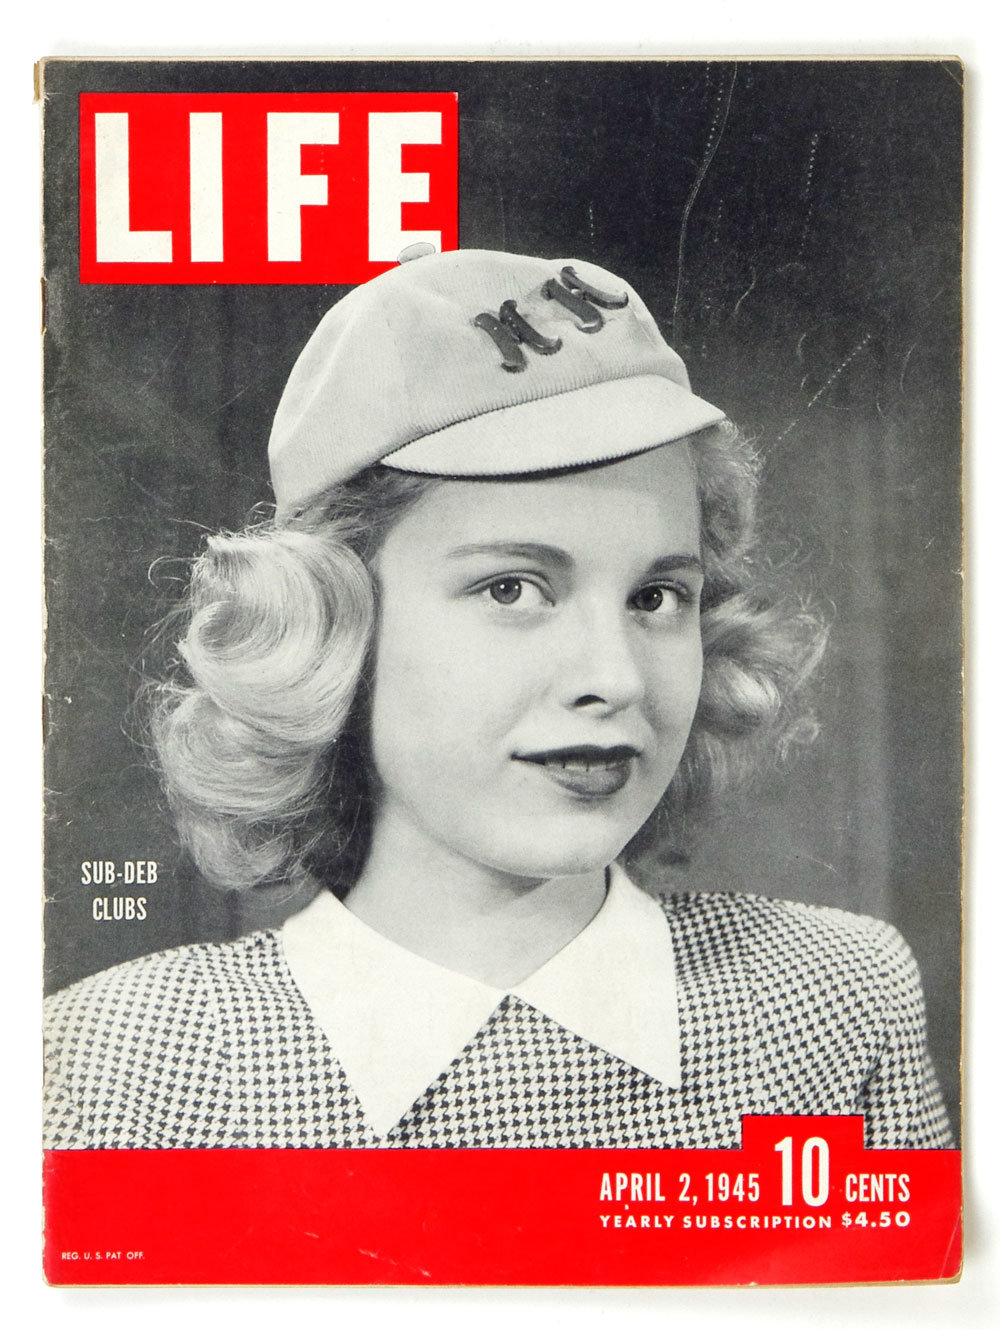 LIFE Magazine Back Issue 1945 April 2 Sub-Deb Clubs